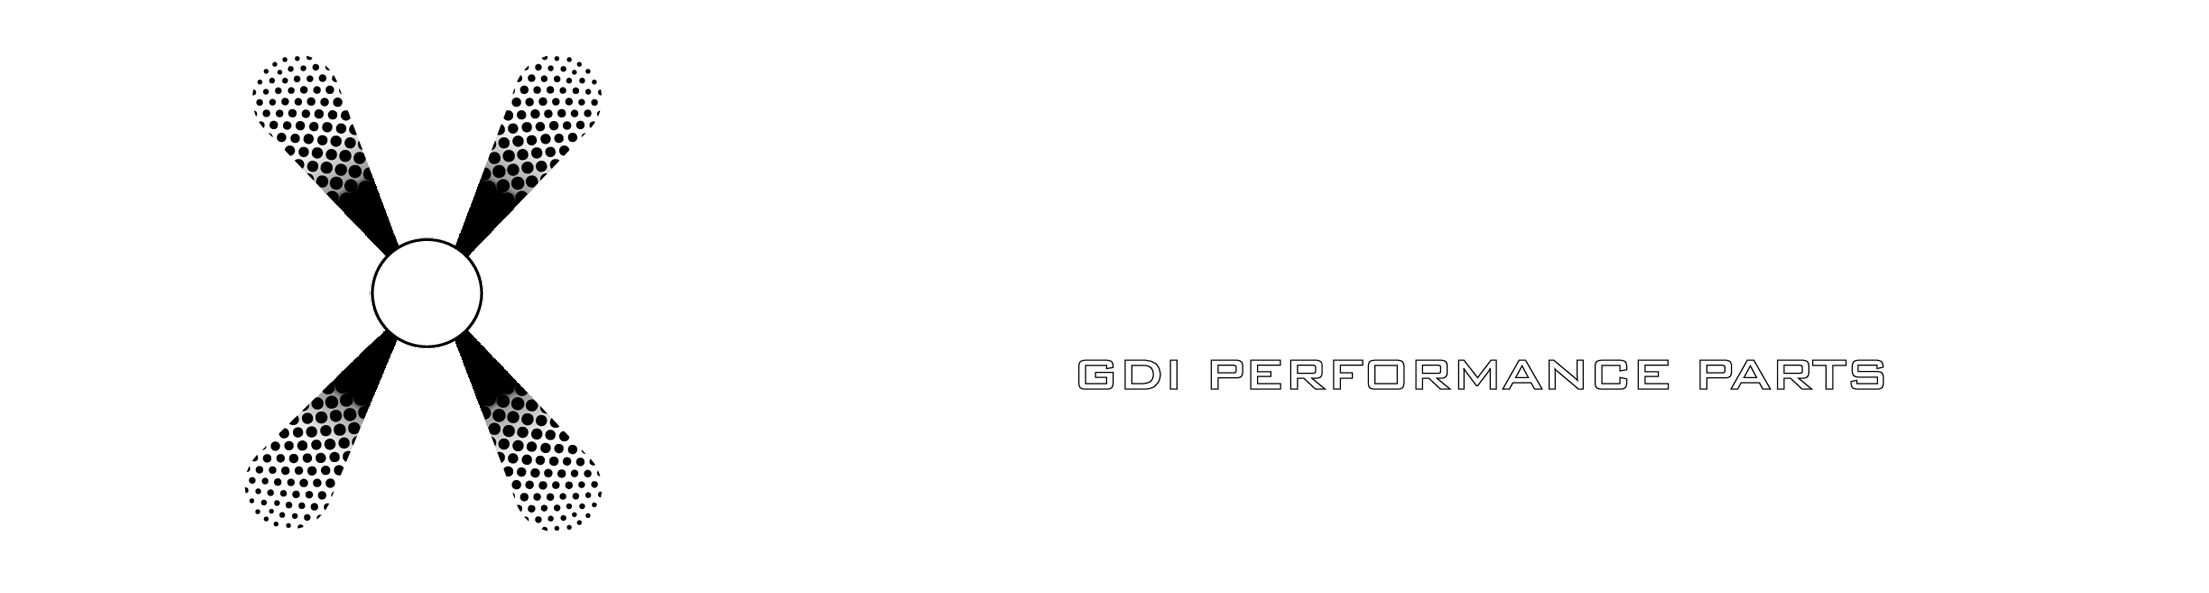 www.xtreme-di.com